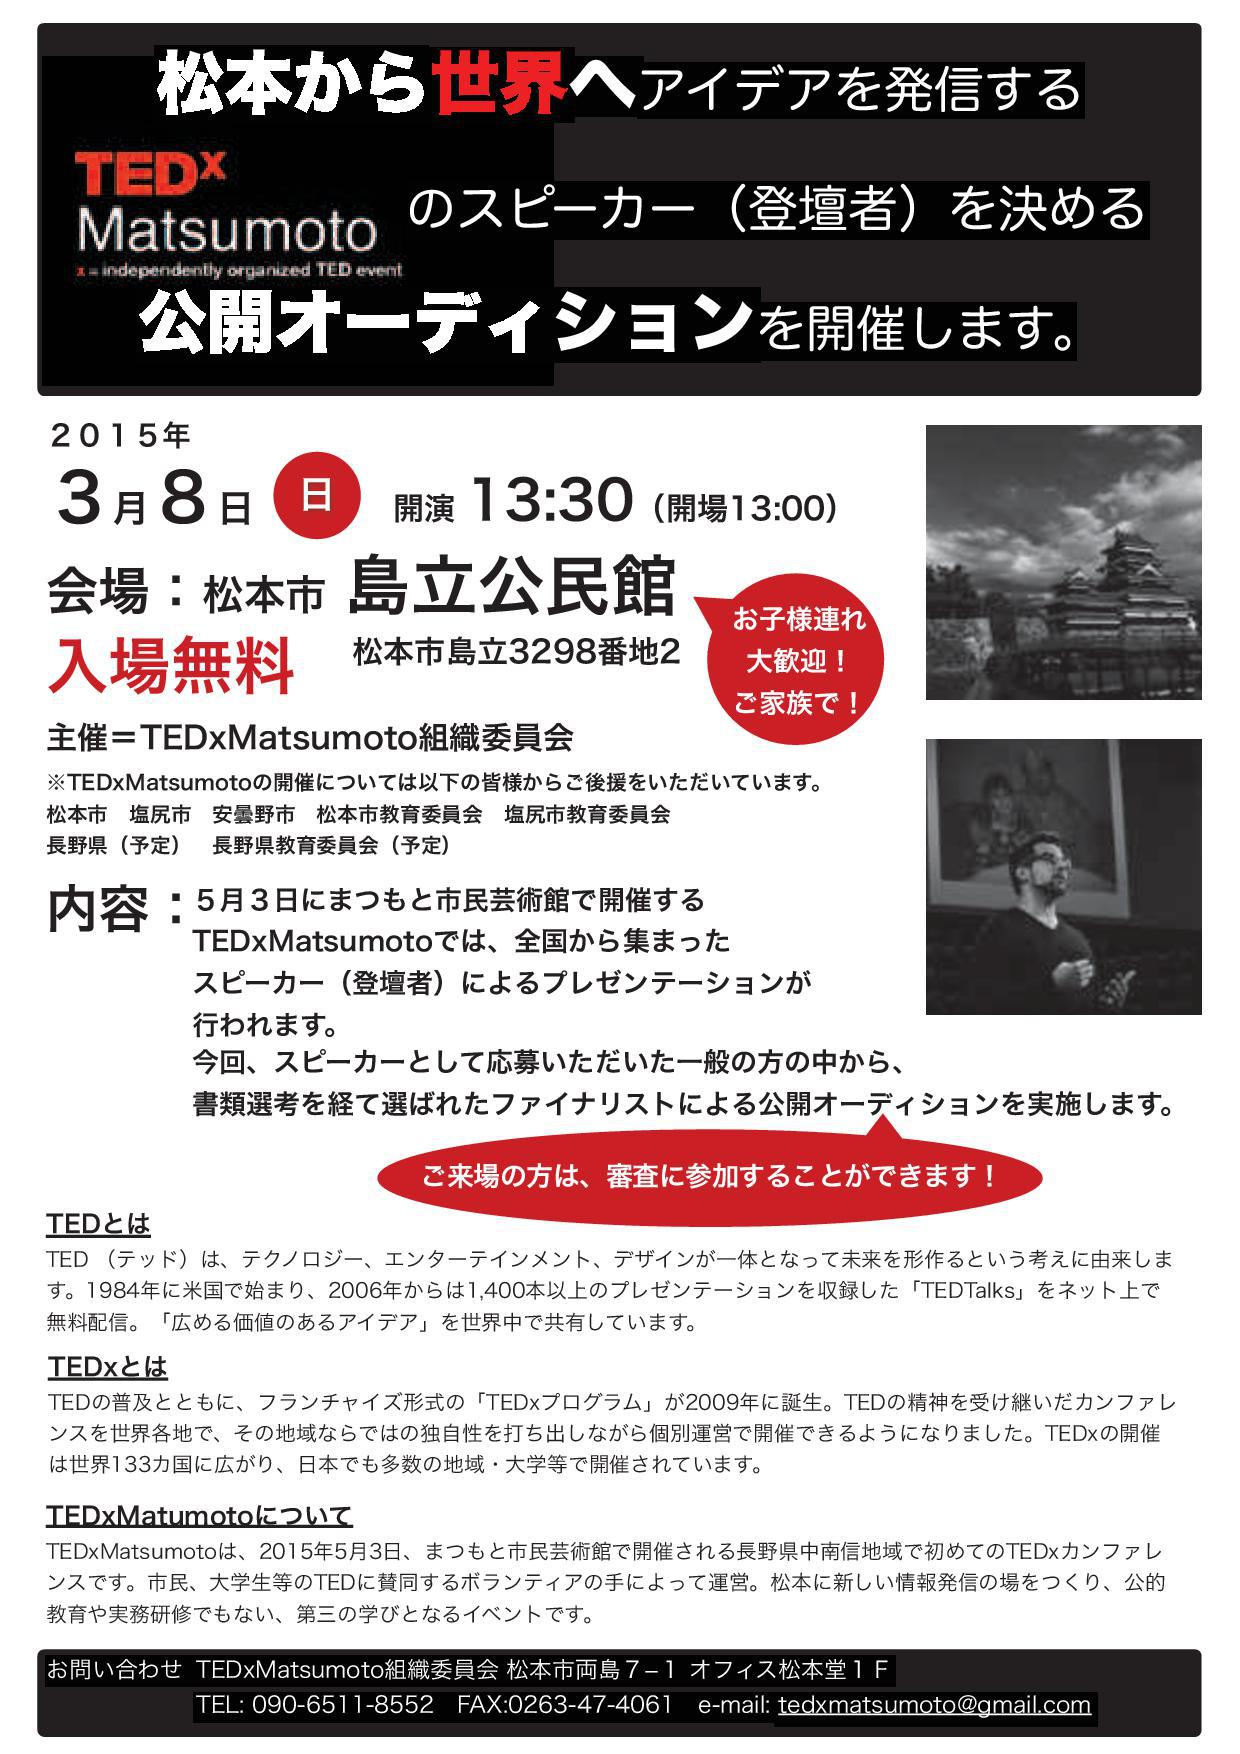 Tedxmatsumoto 3 8日 13 30 公開オーディション開催決定